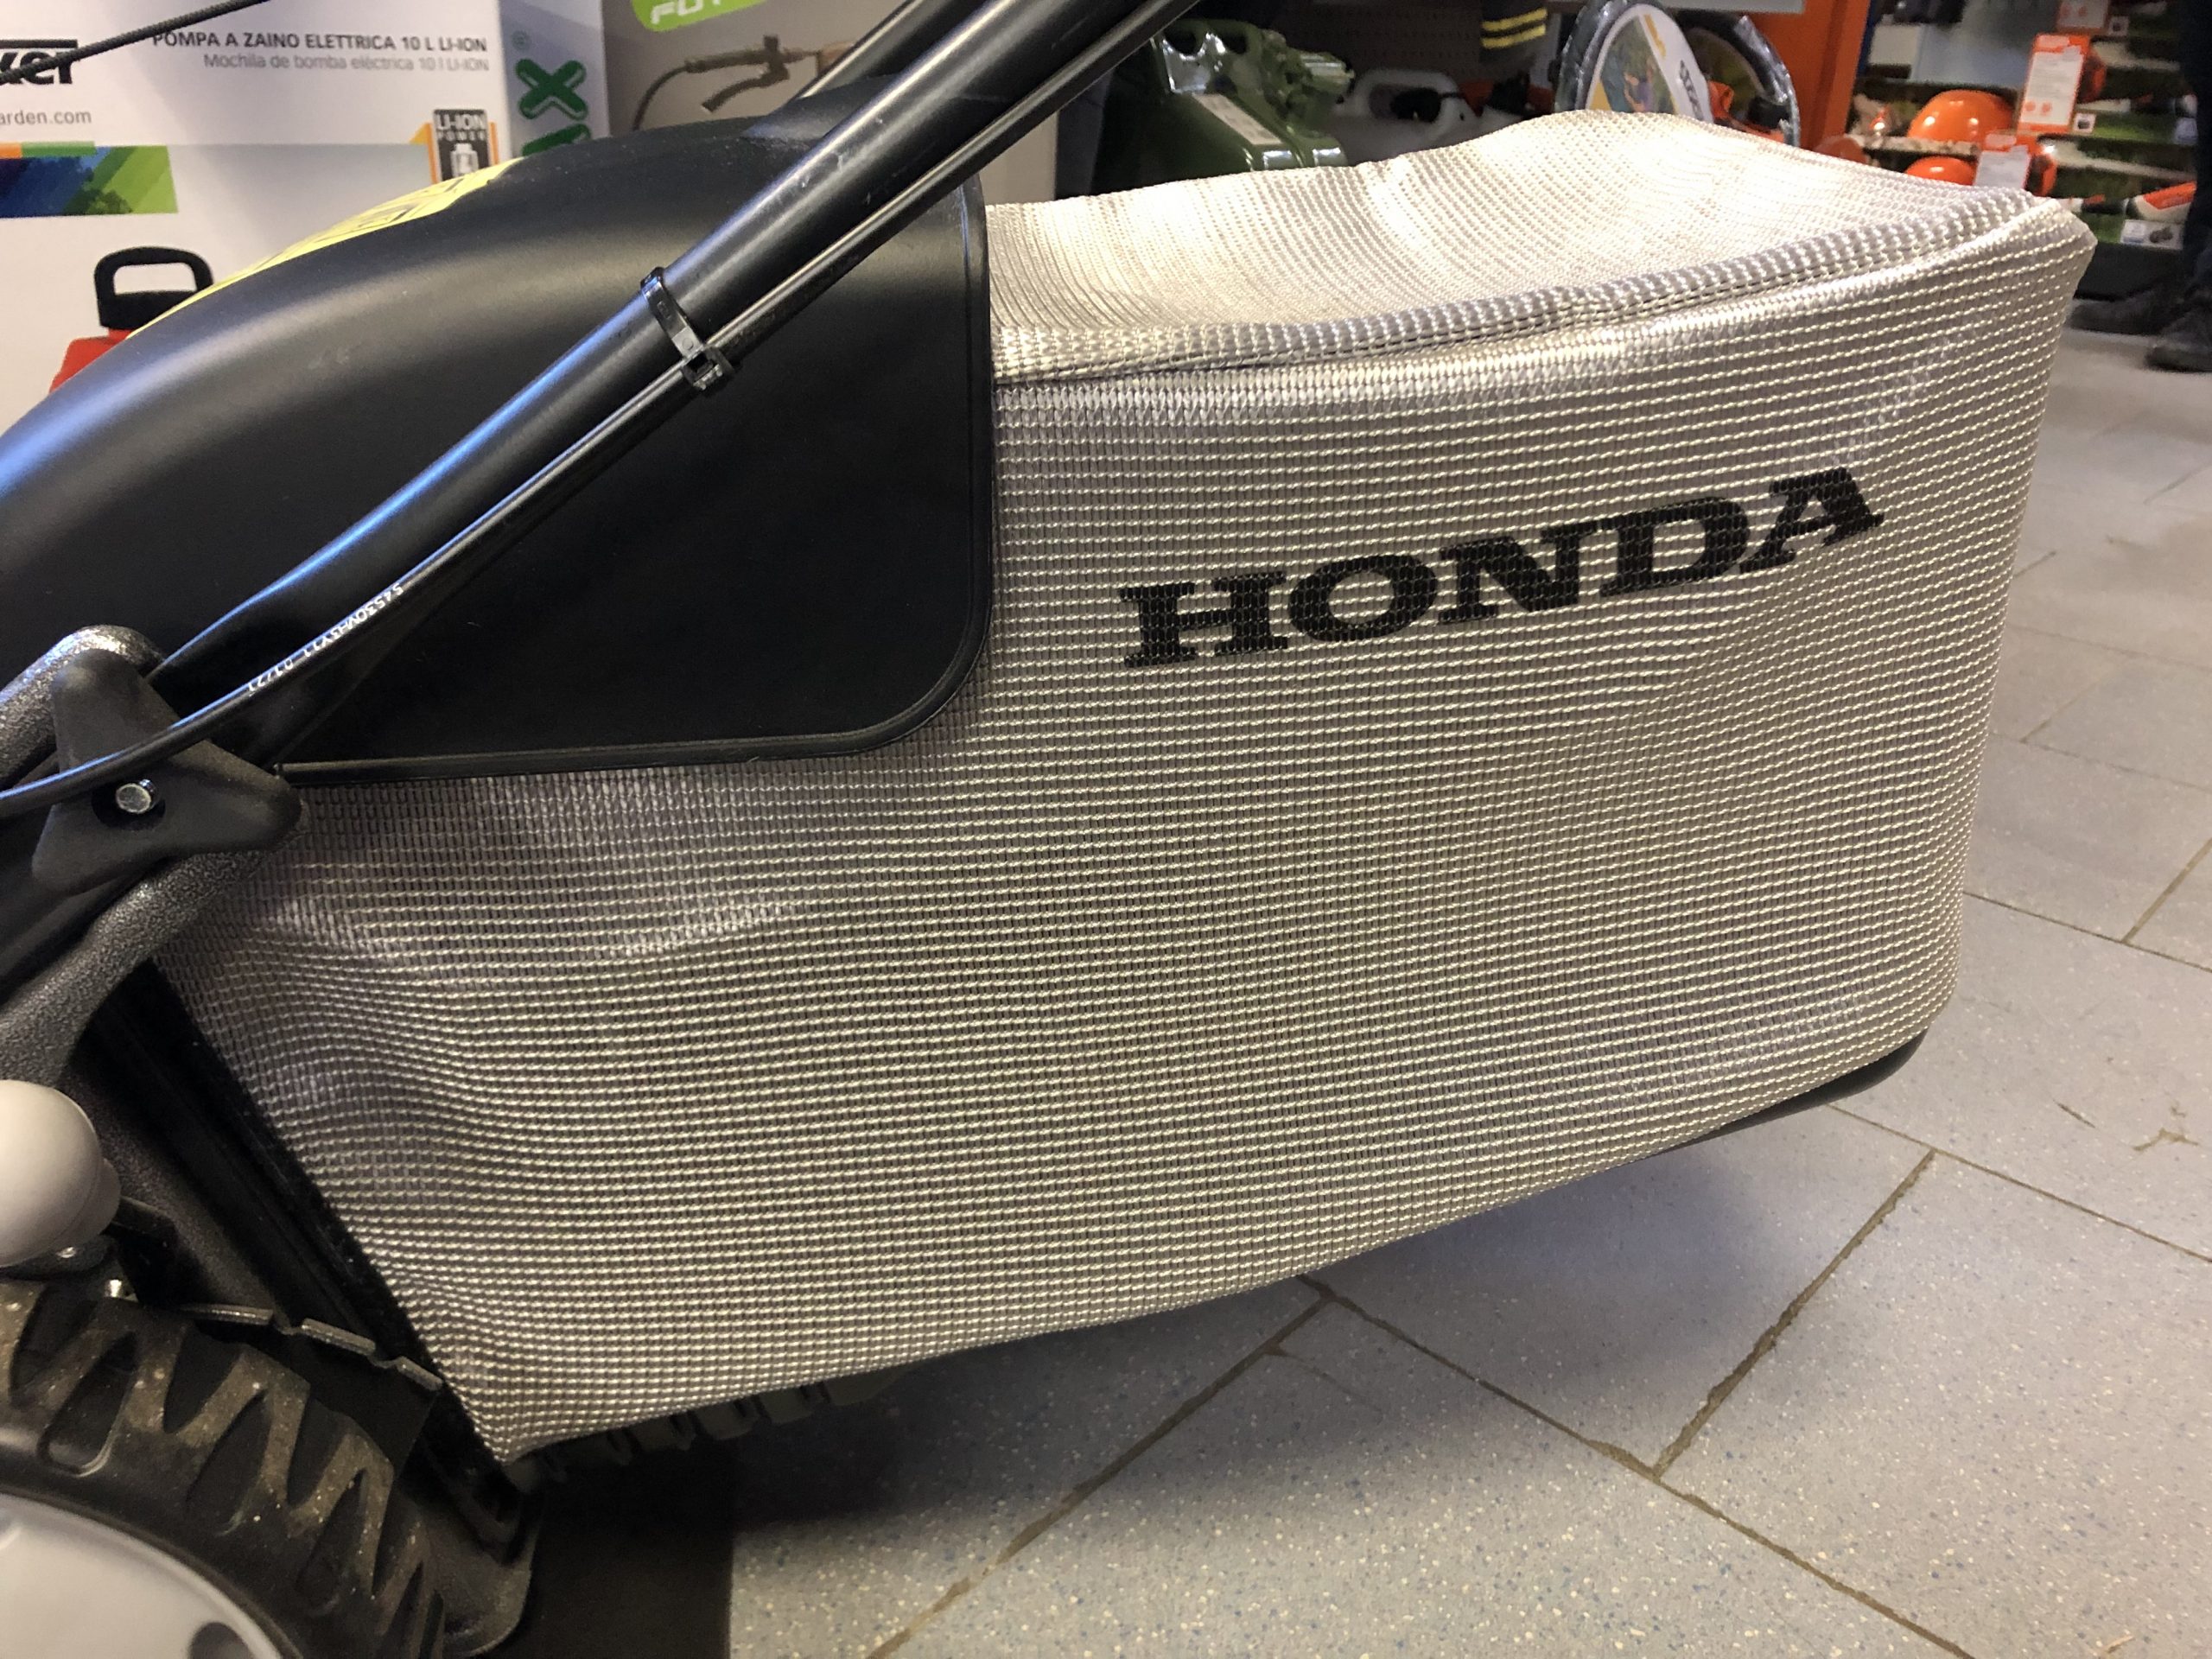 Tagliaerba Honda HRG416PK - alliastore